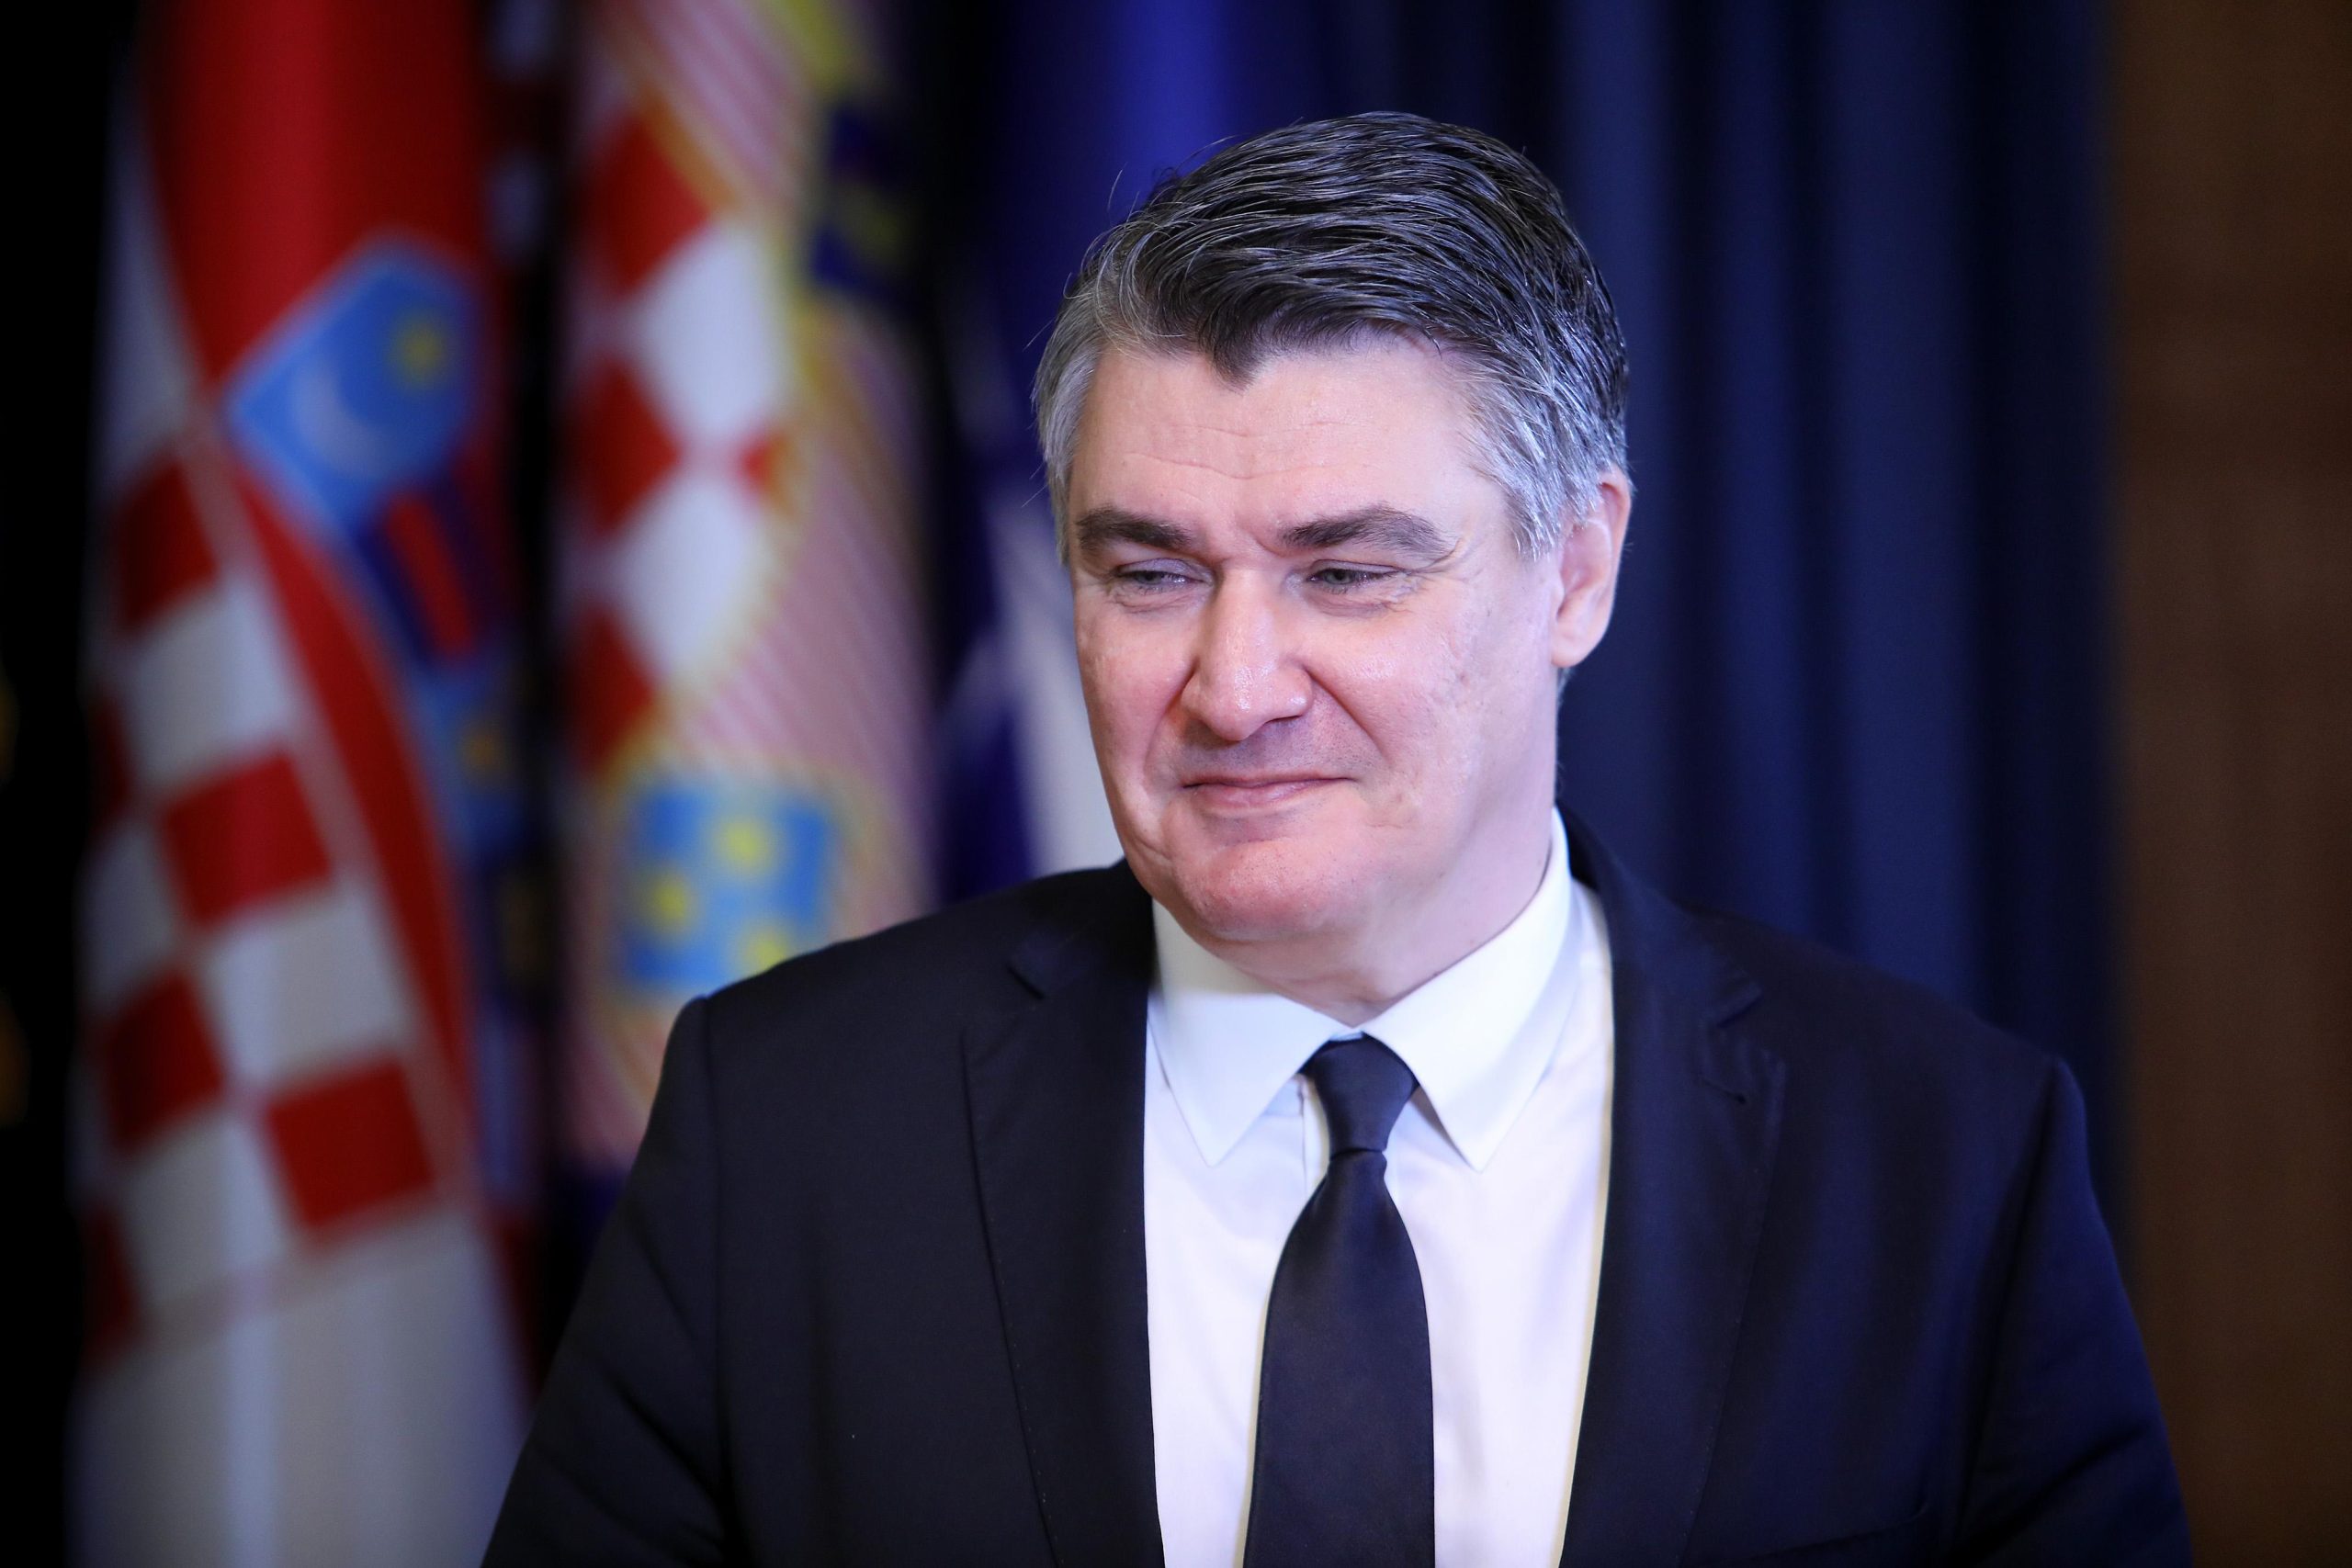 09.11.2020., Zagreb - Predsjednik Republike Hrvatske Zoran Milanovic. Photo: Boris Scitar/Vecernji list/PIXSELL